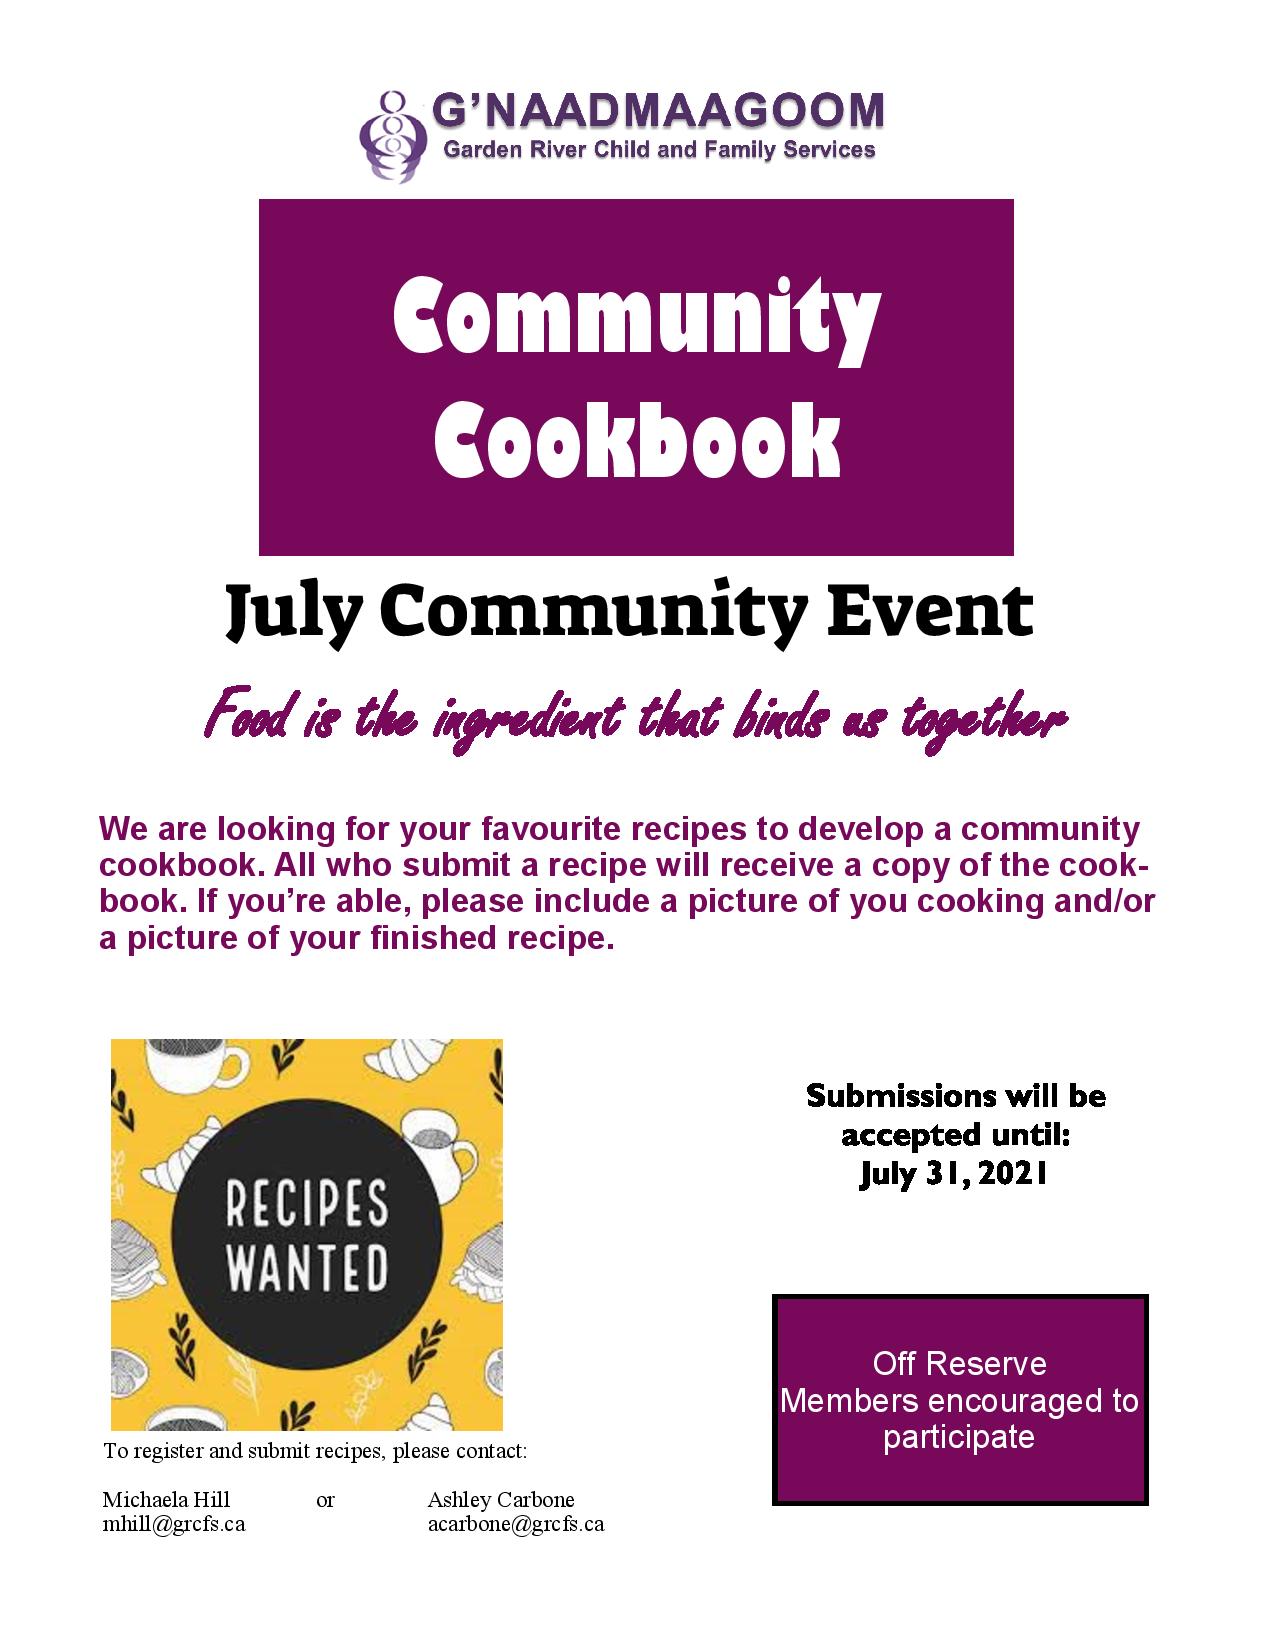 GR CFS July Community Event: Community Cookbook